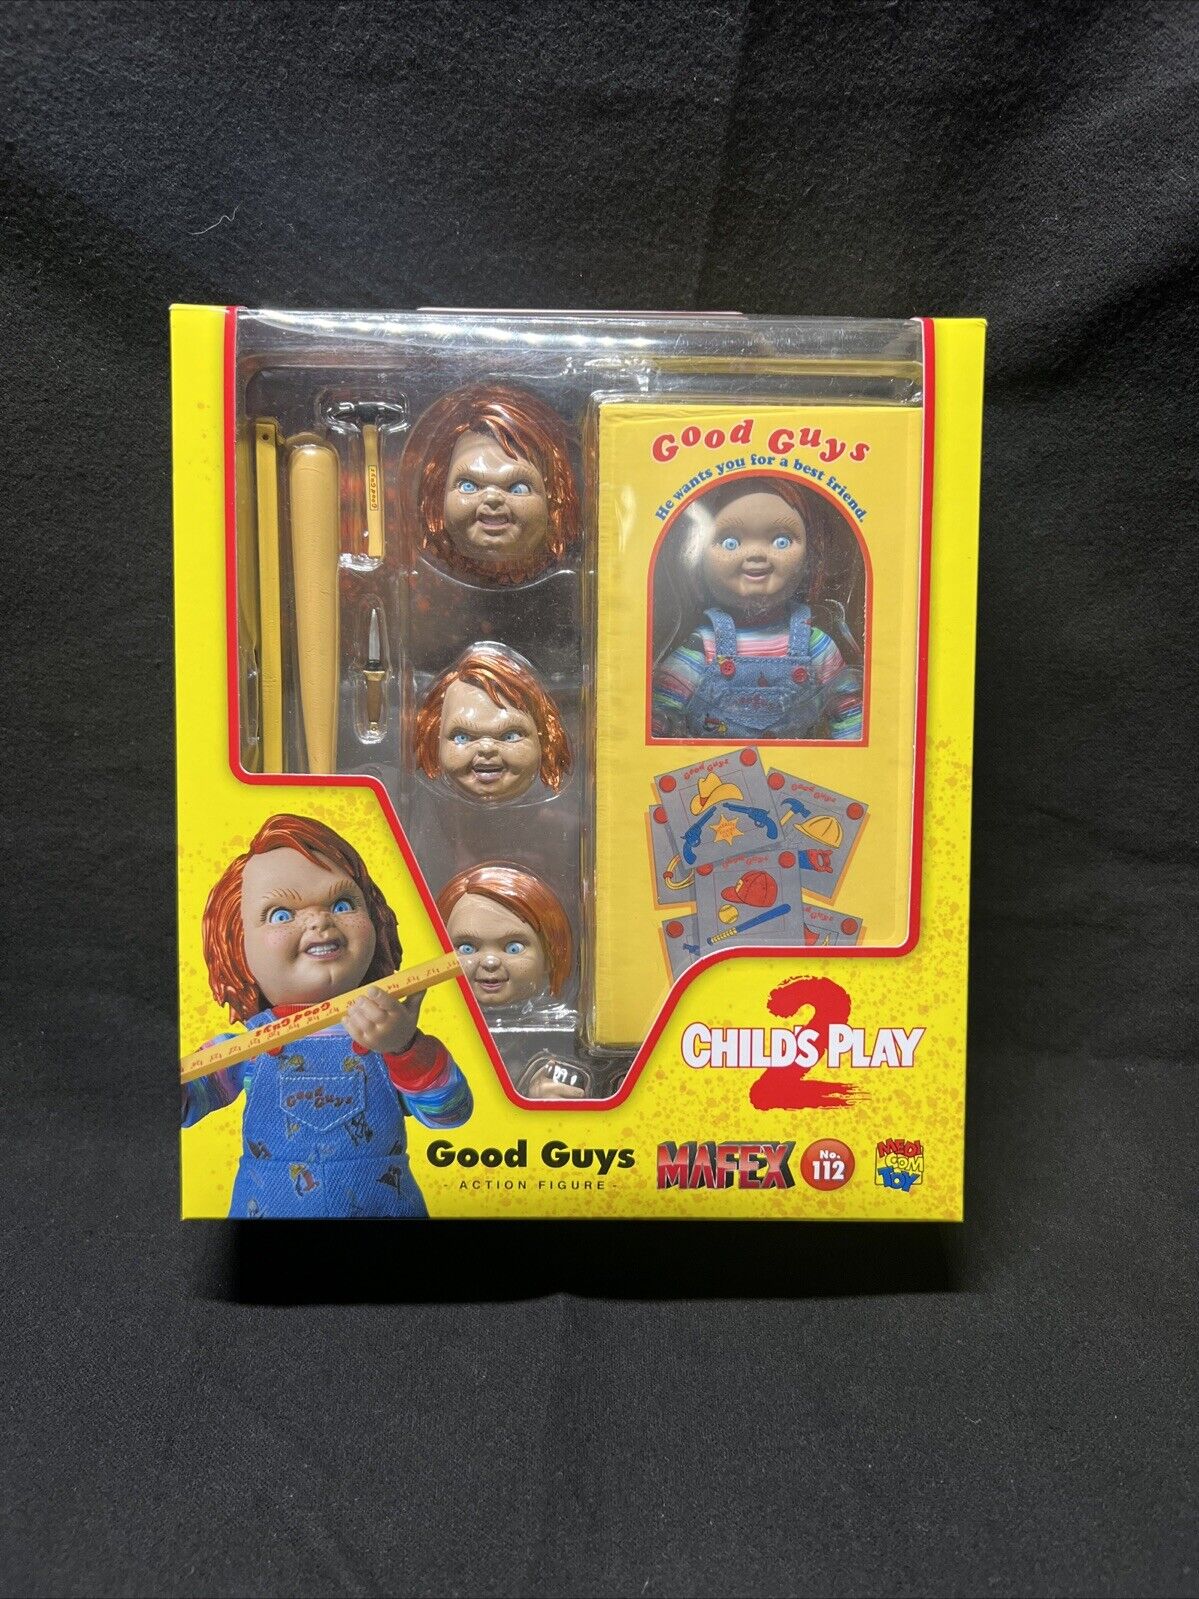 MAFEX No. 112 Medicom Child's Play 2 Good Guys Chucky Action Figure - US Seller